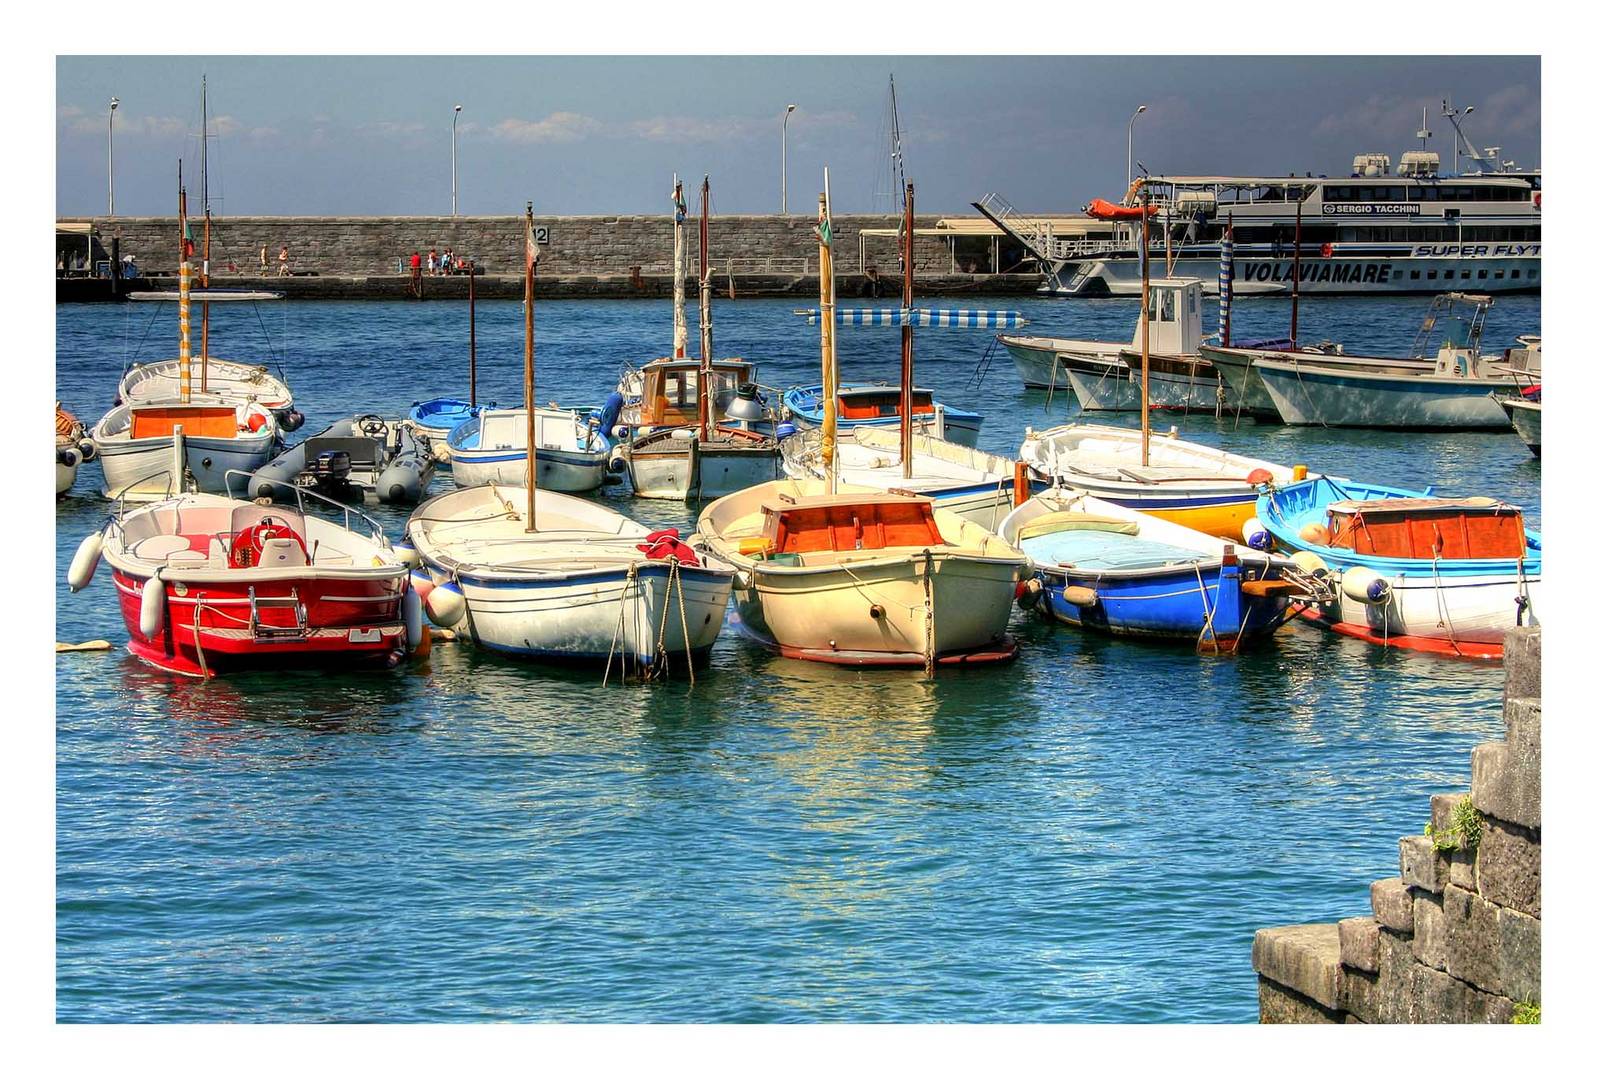 Capri boats